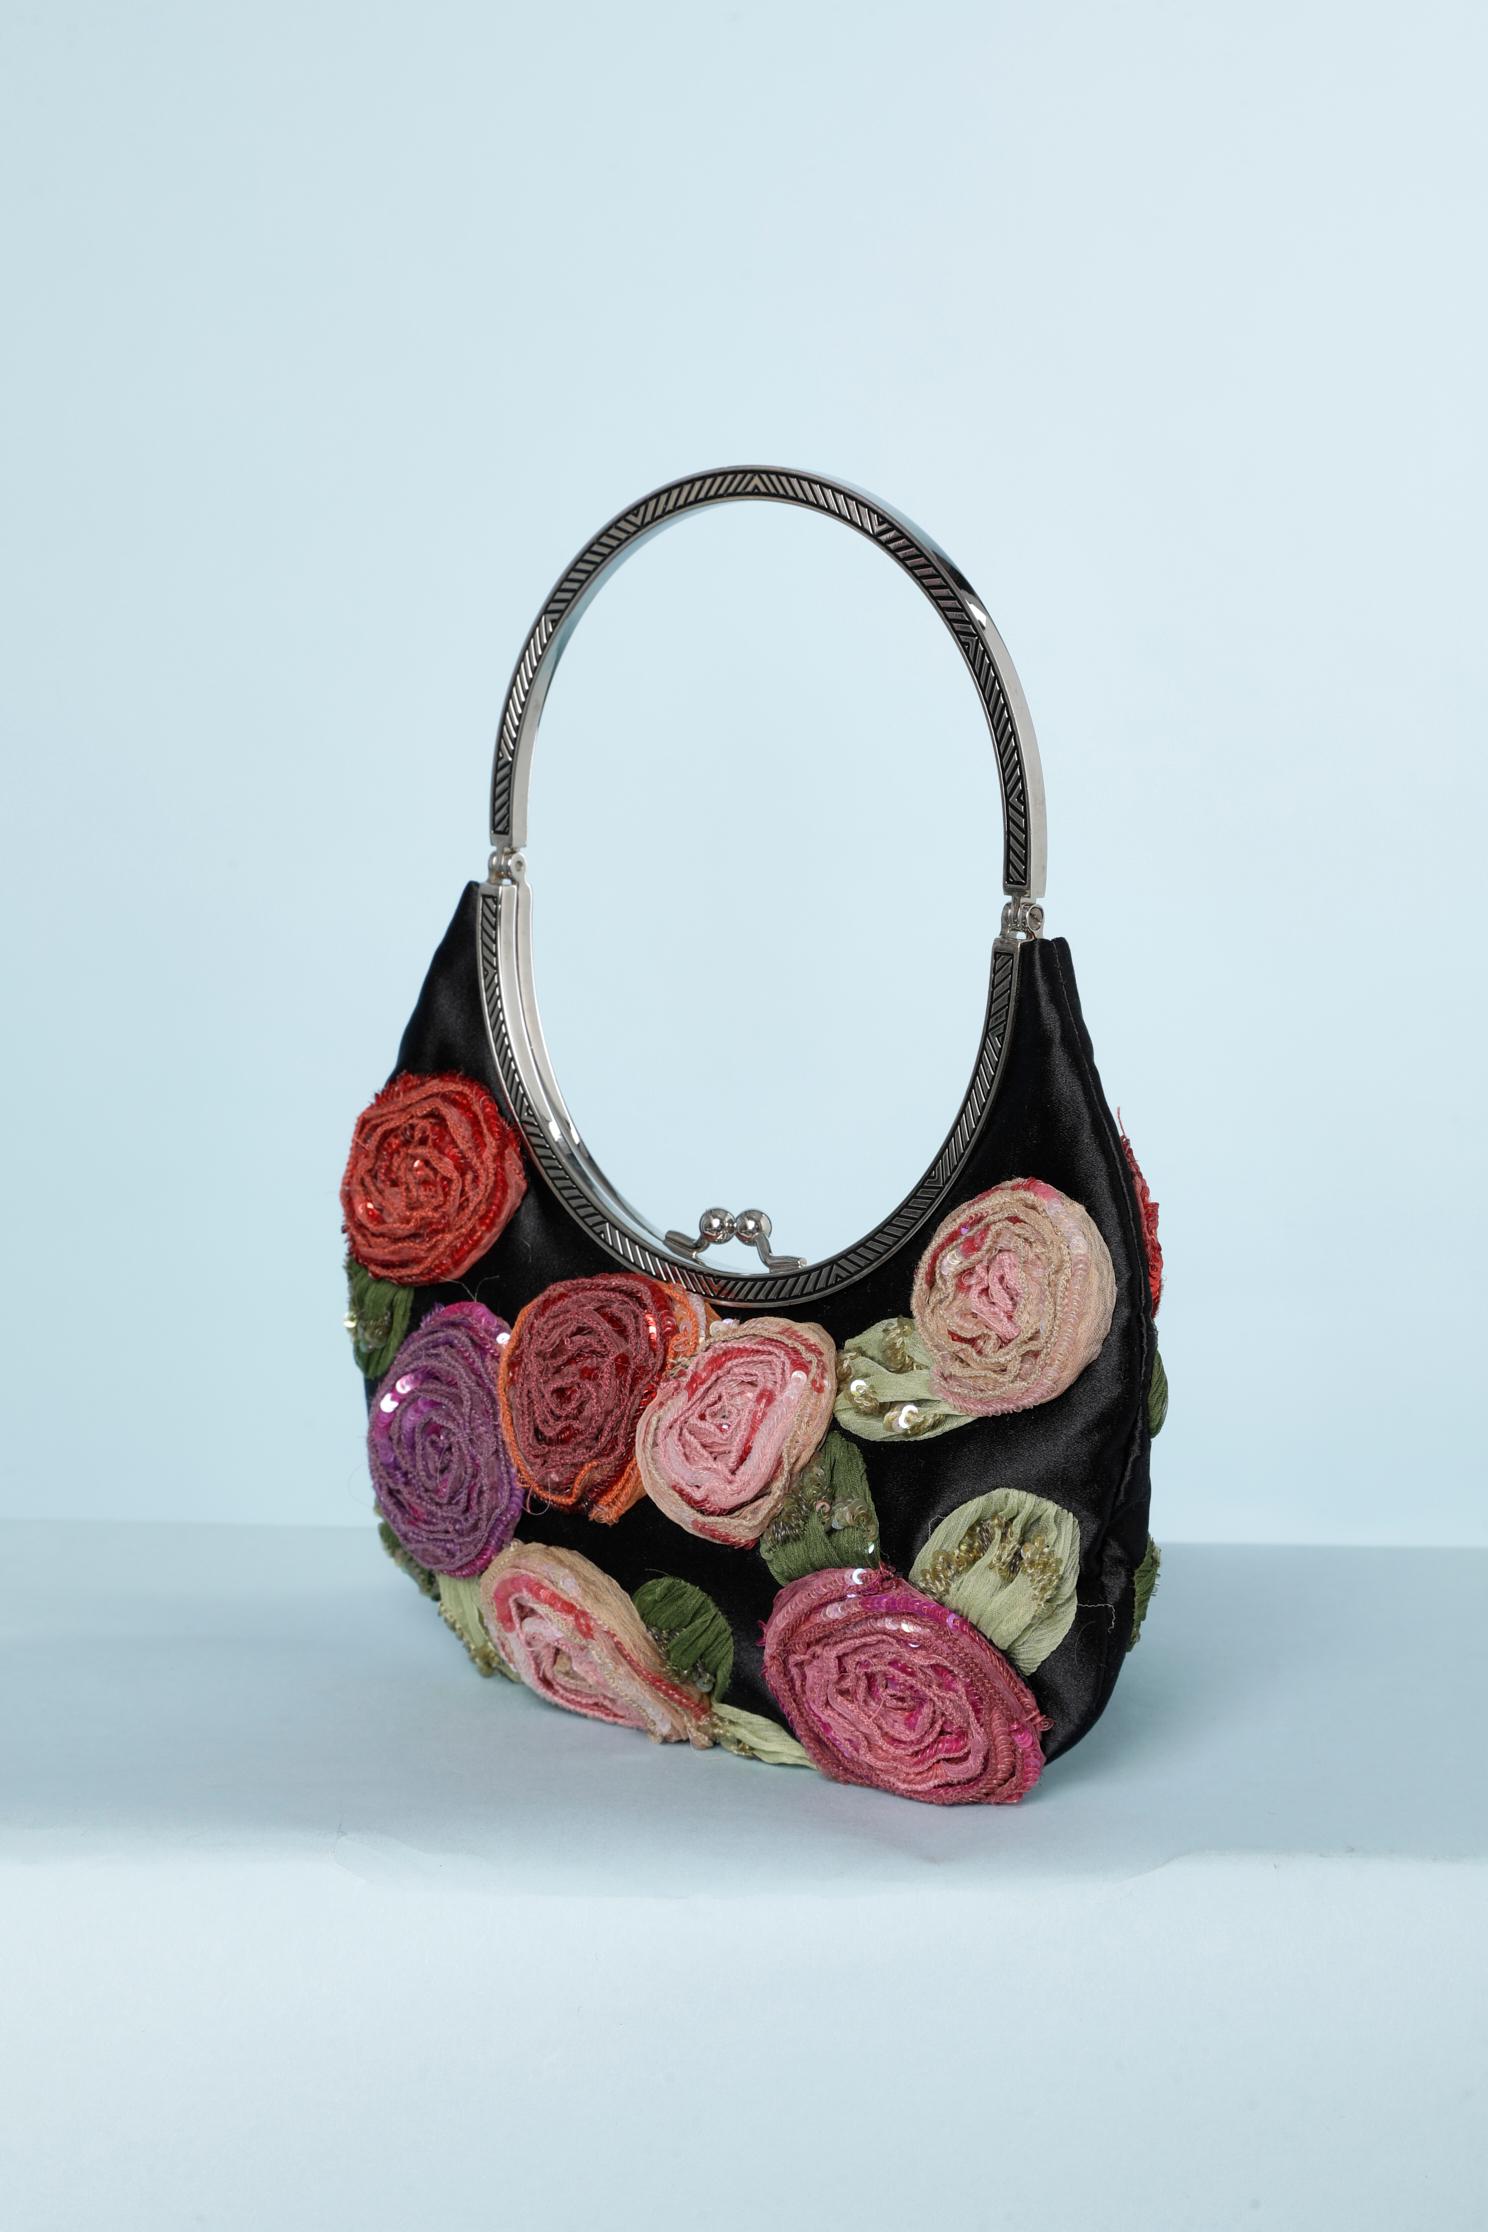 Women's Evening bag in black satin, chiffon and sequin roses Valentino Garavani 